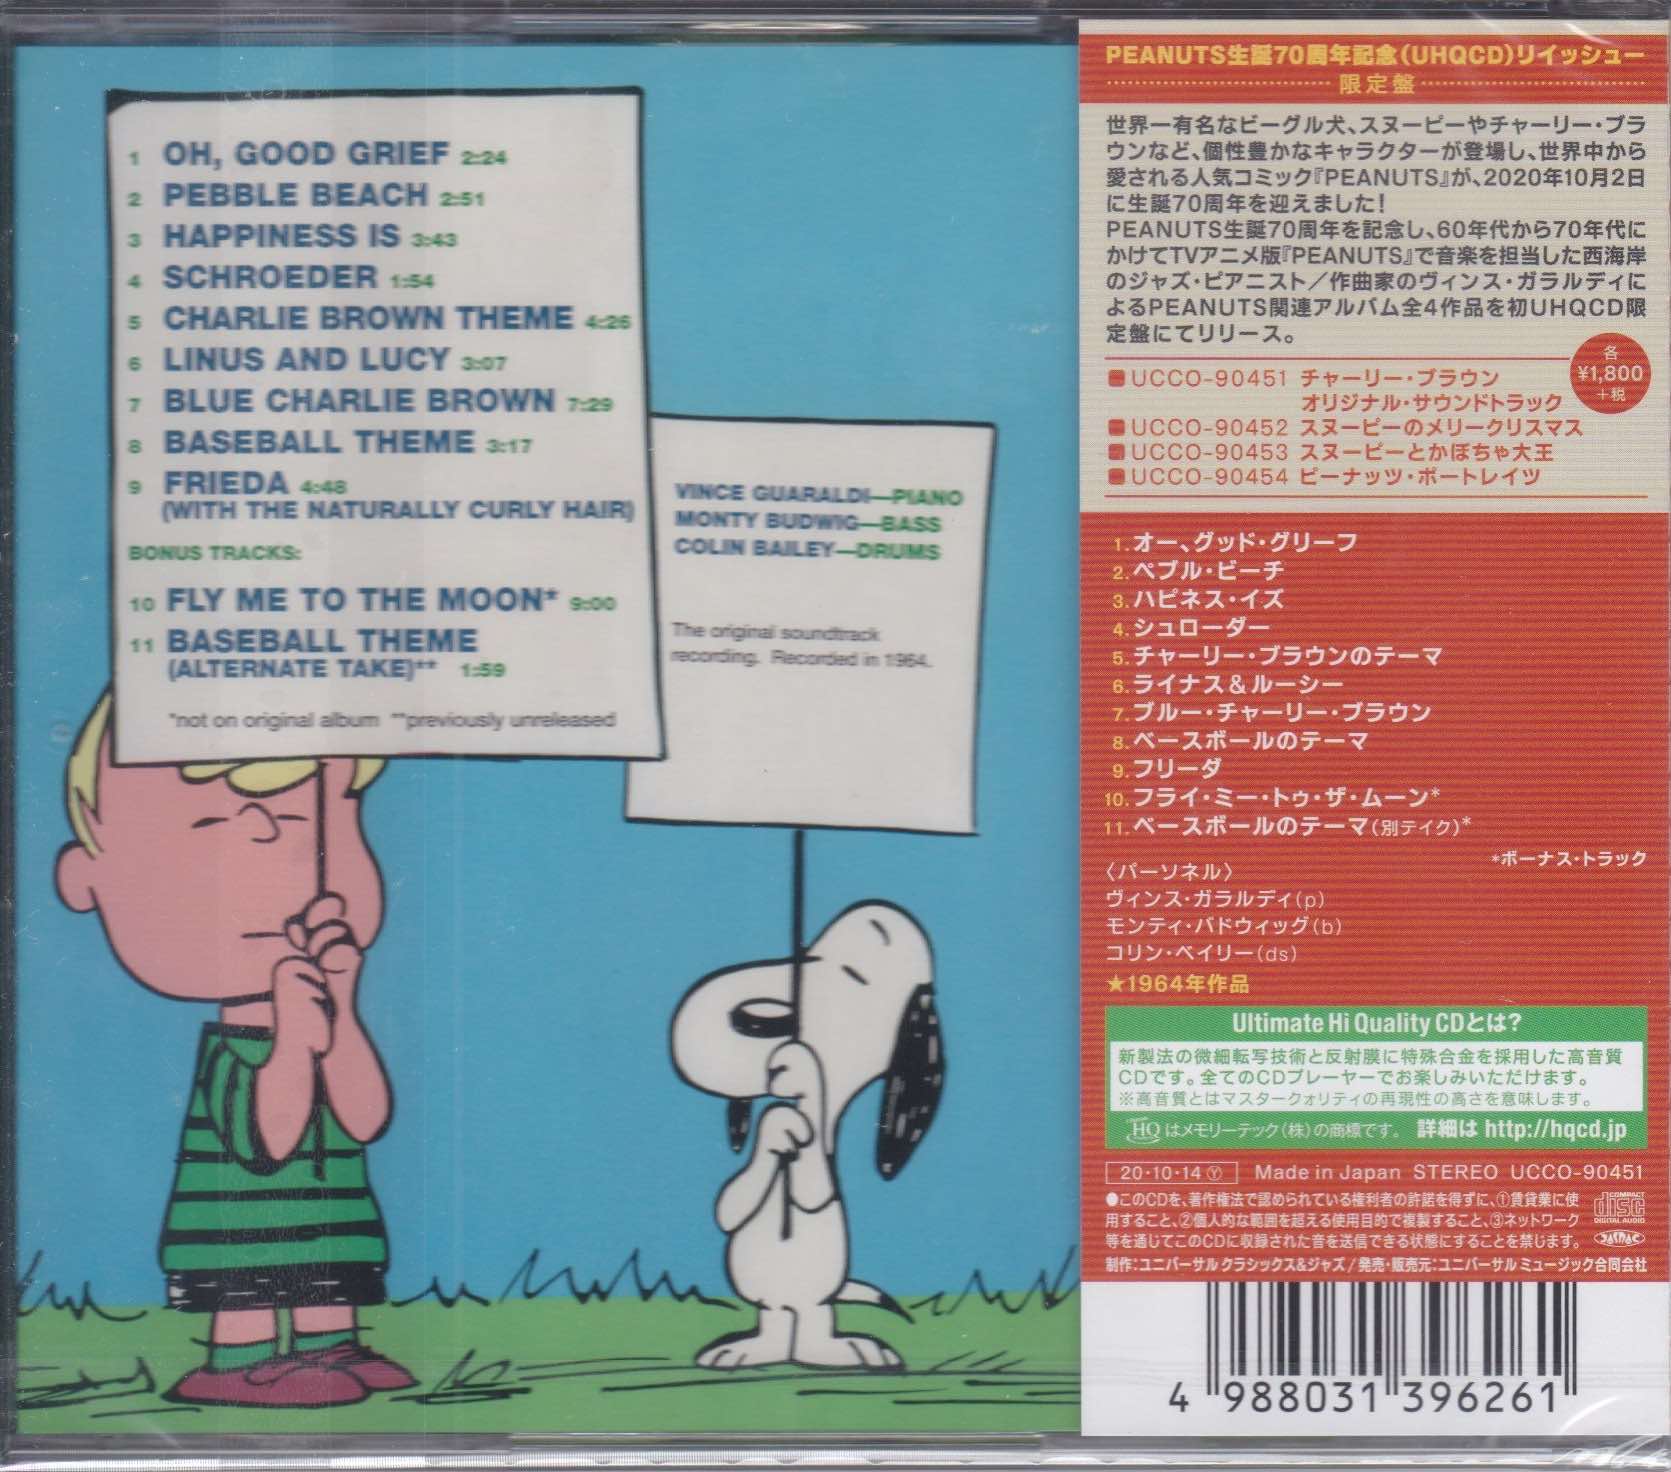 Vince Guaraldi Trio ‎– A Boy Named Charlie Brown (The Original Sound track Recording)